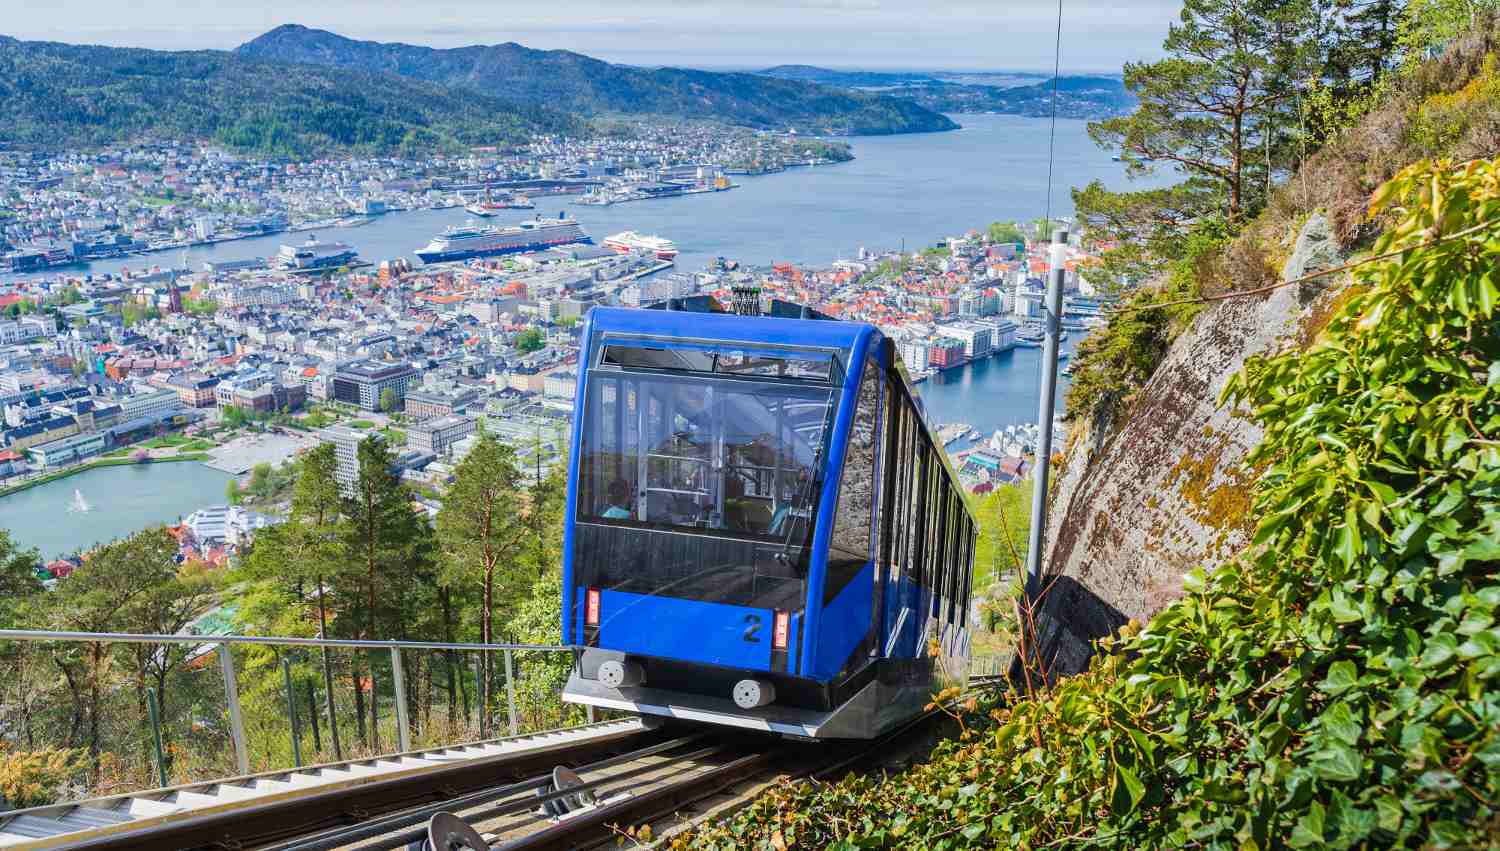 Fløibanen funicular in Bergen